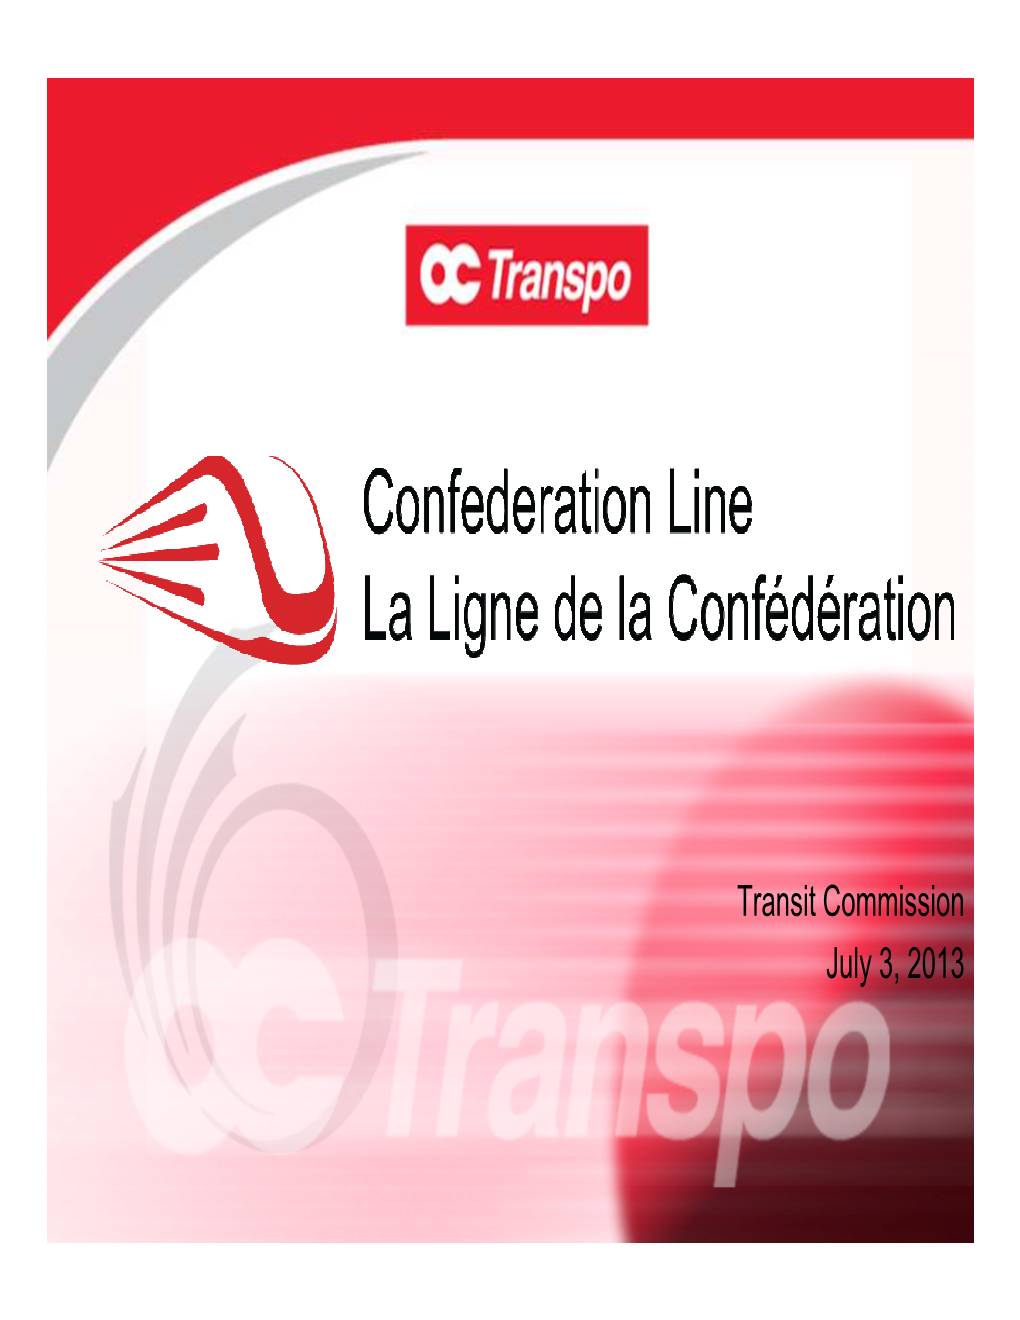 Transit Commission July 3, 2013 Objective